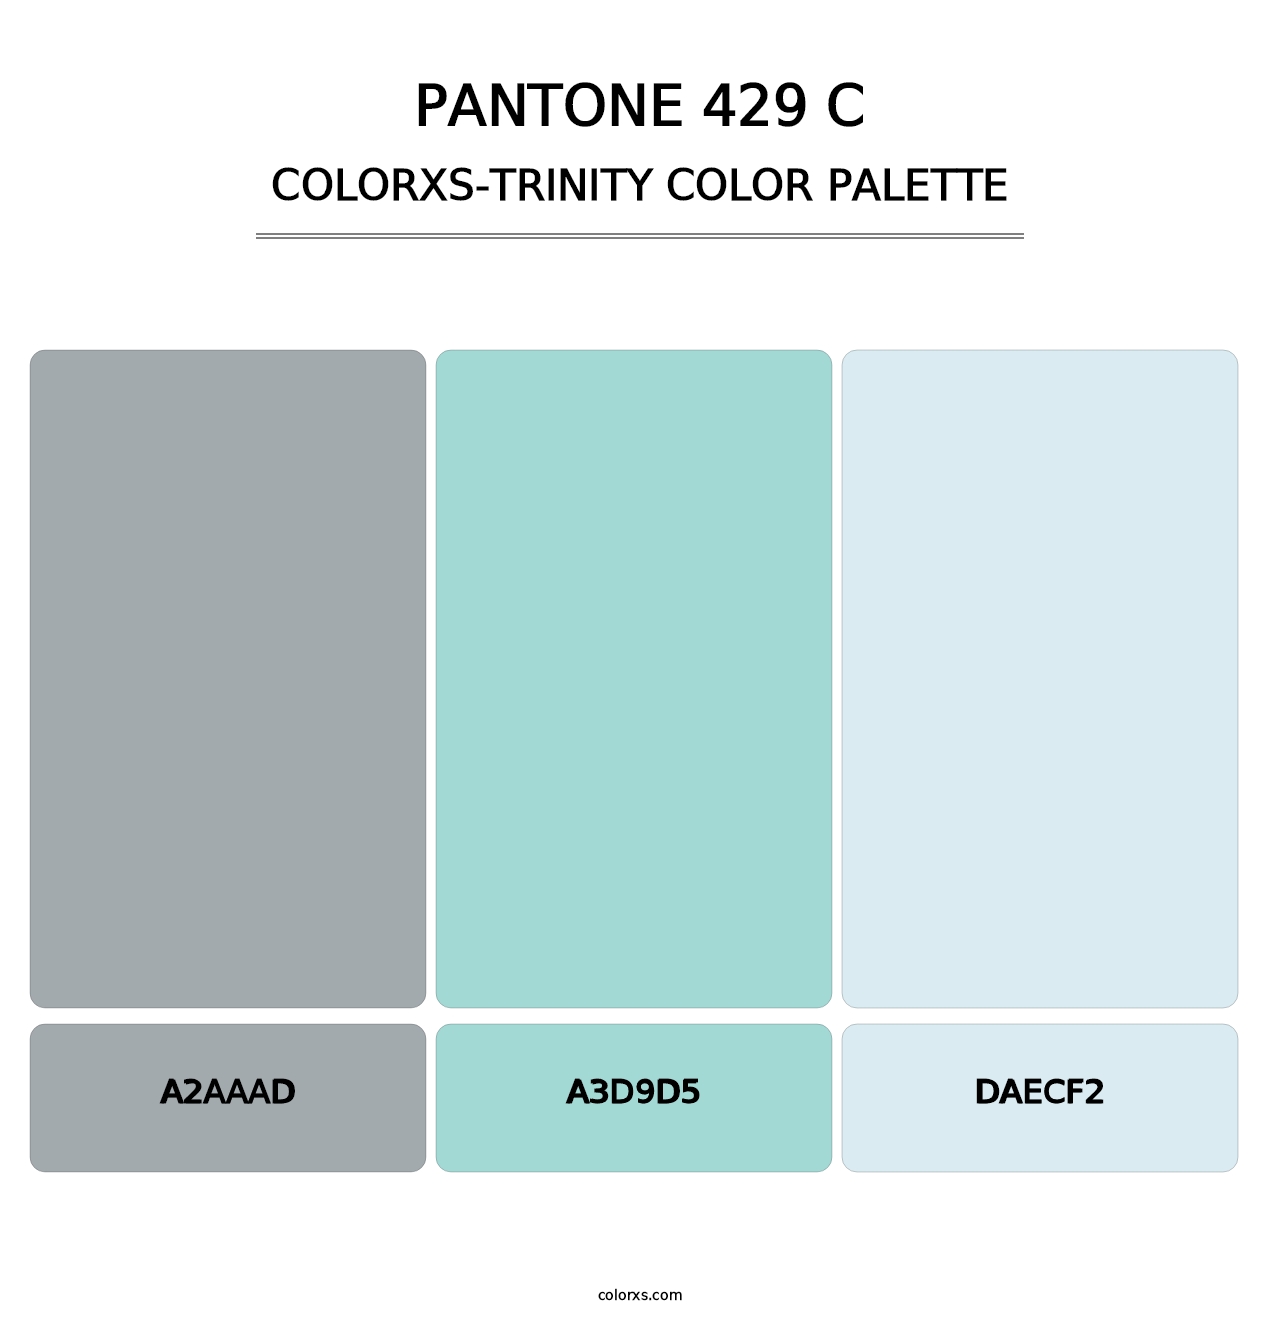 PANTONE 429 C - Colorxs Trinity Palette